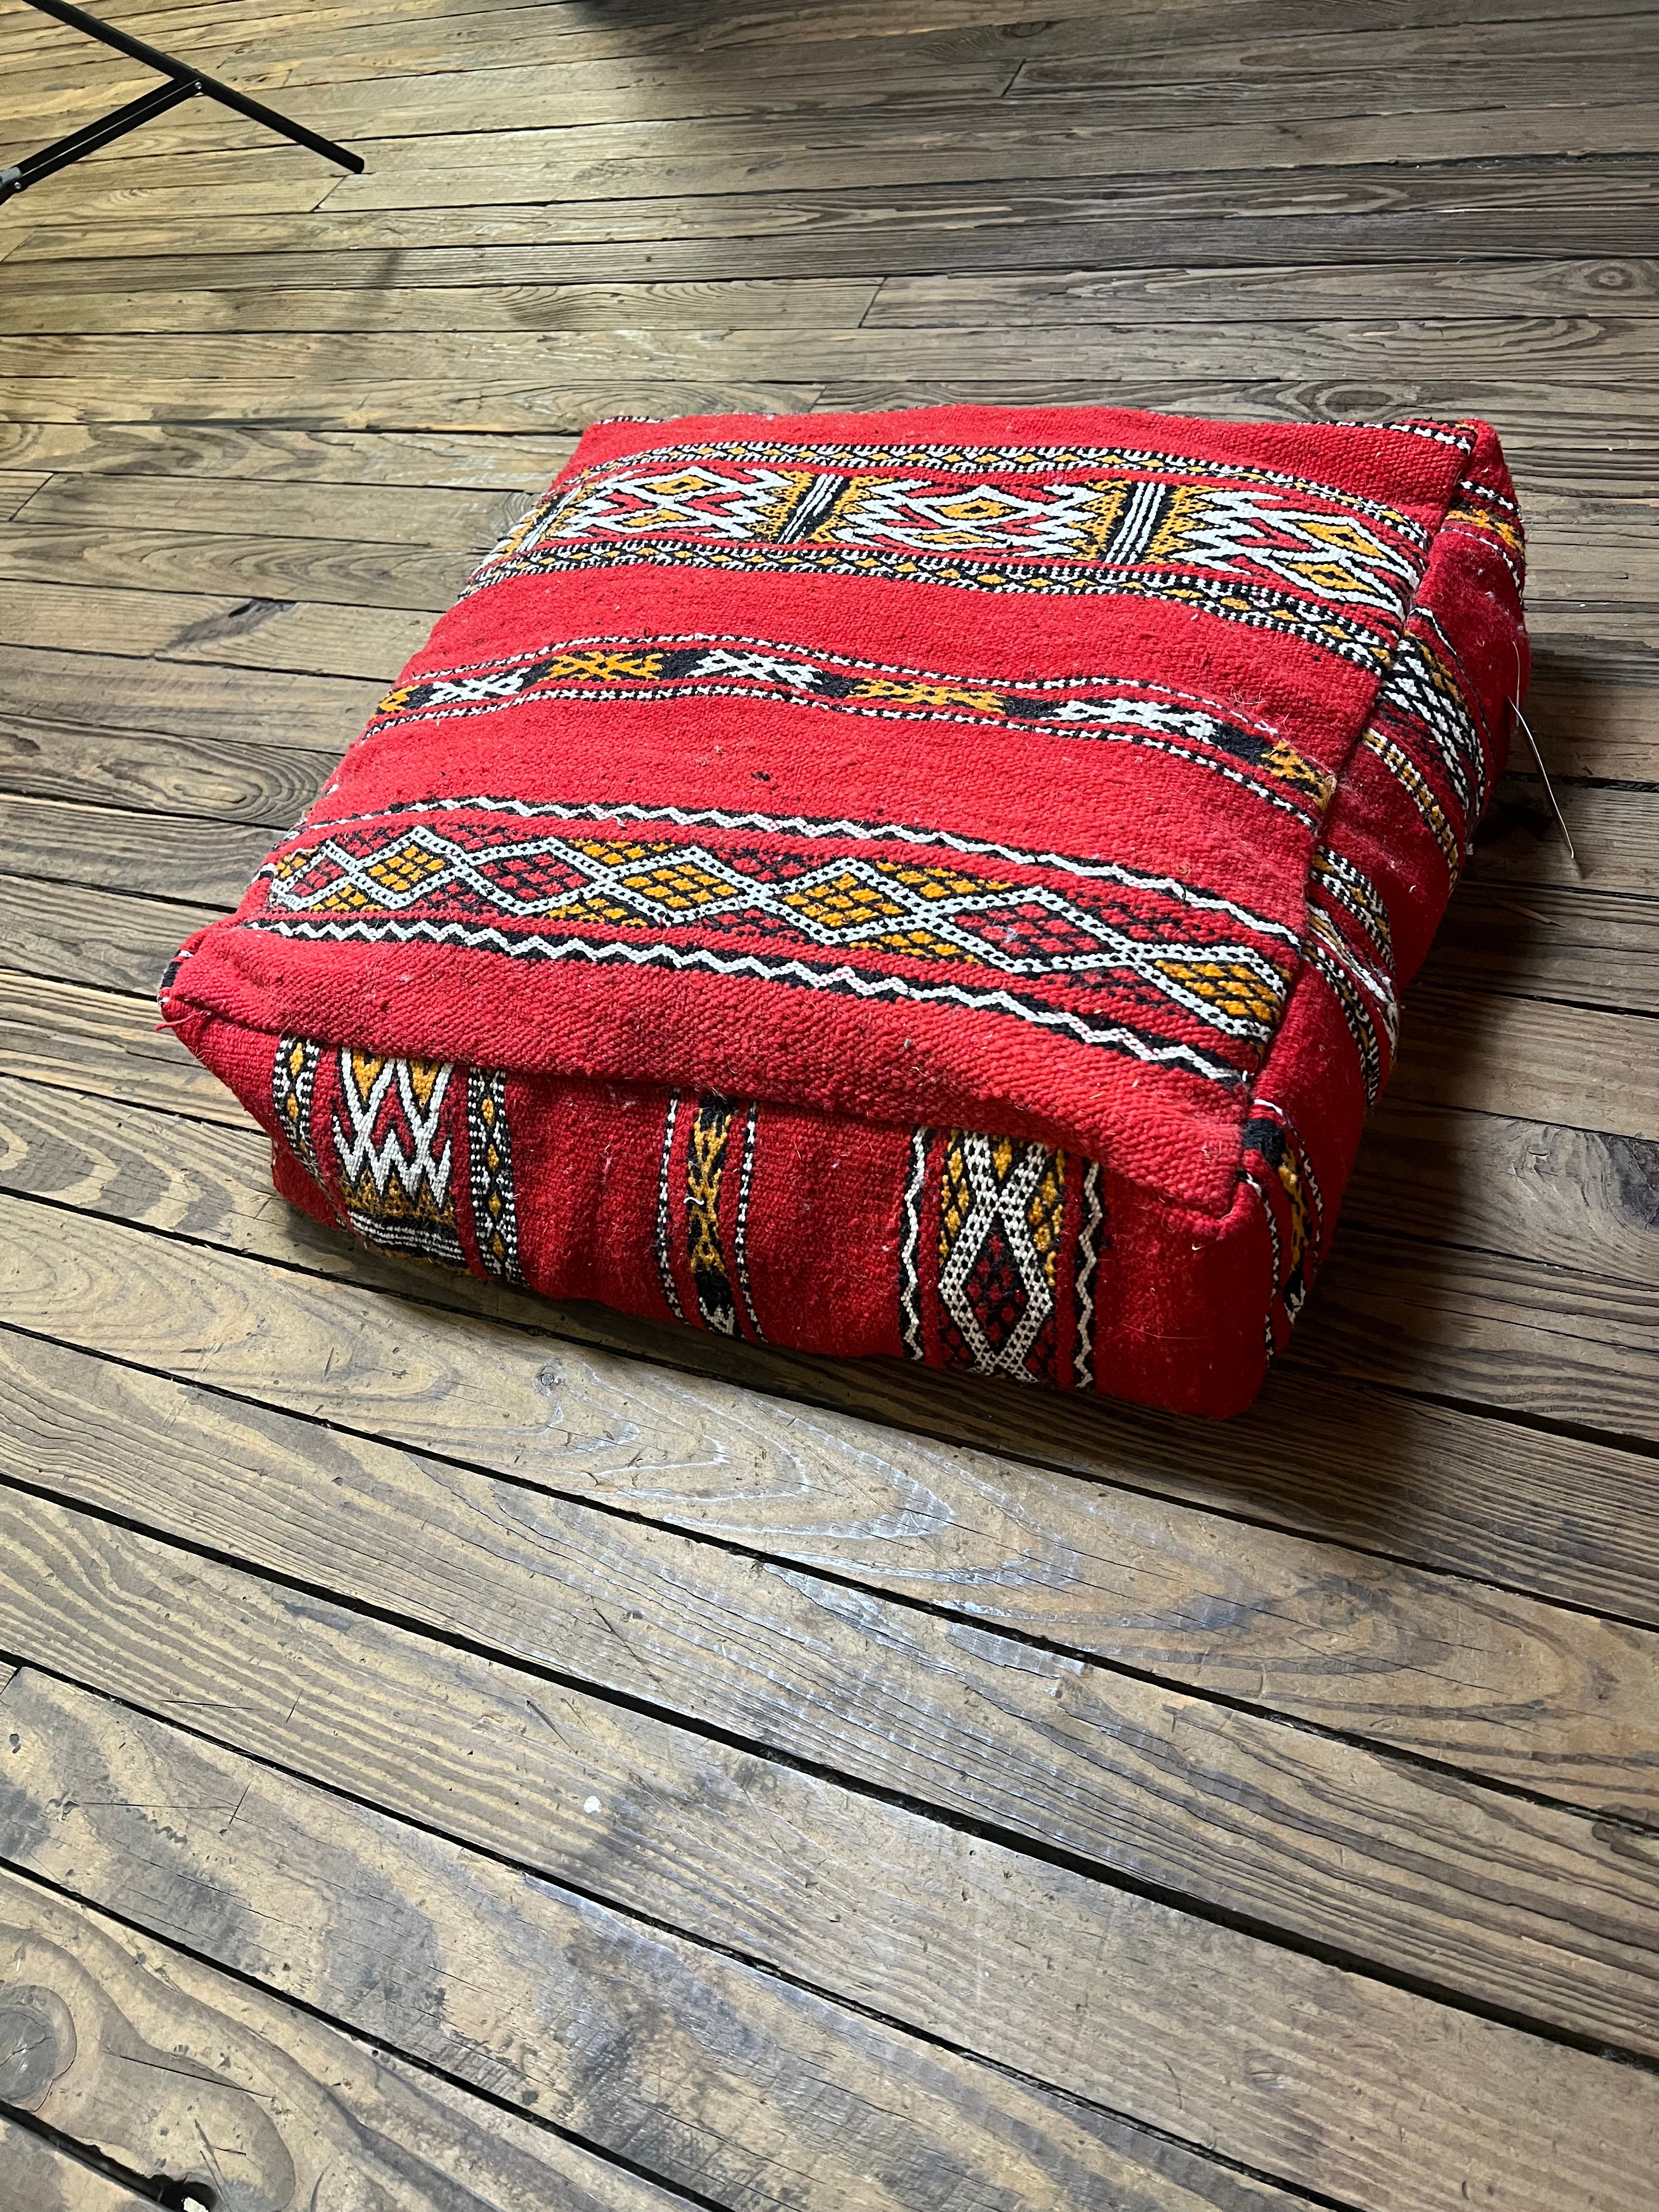 Moroccan Floor Cushion Red 6